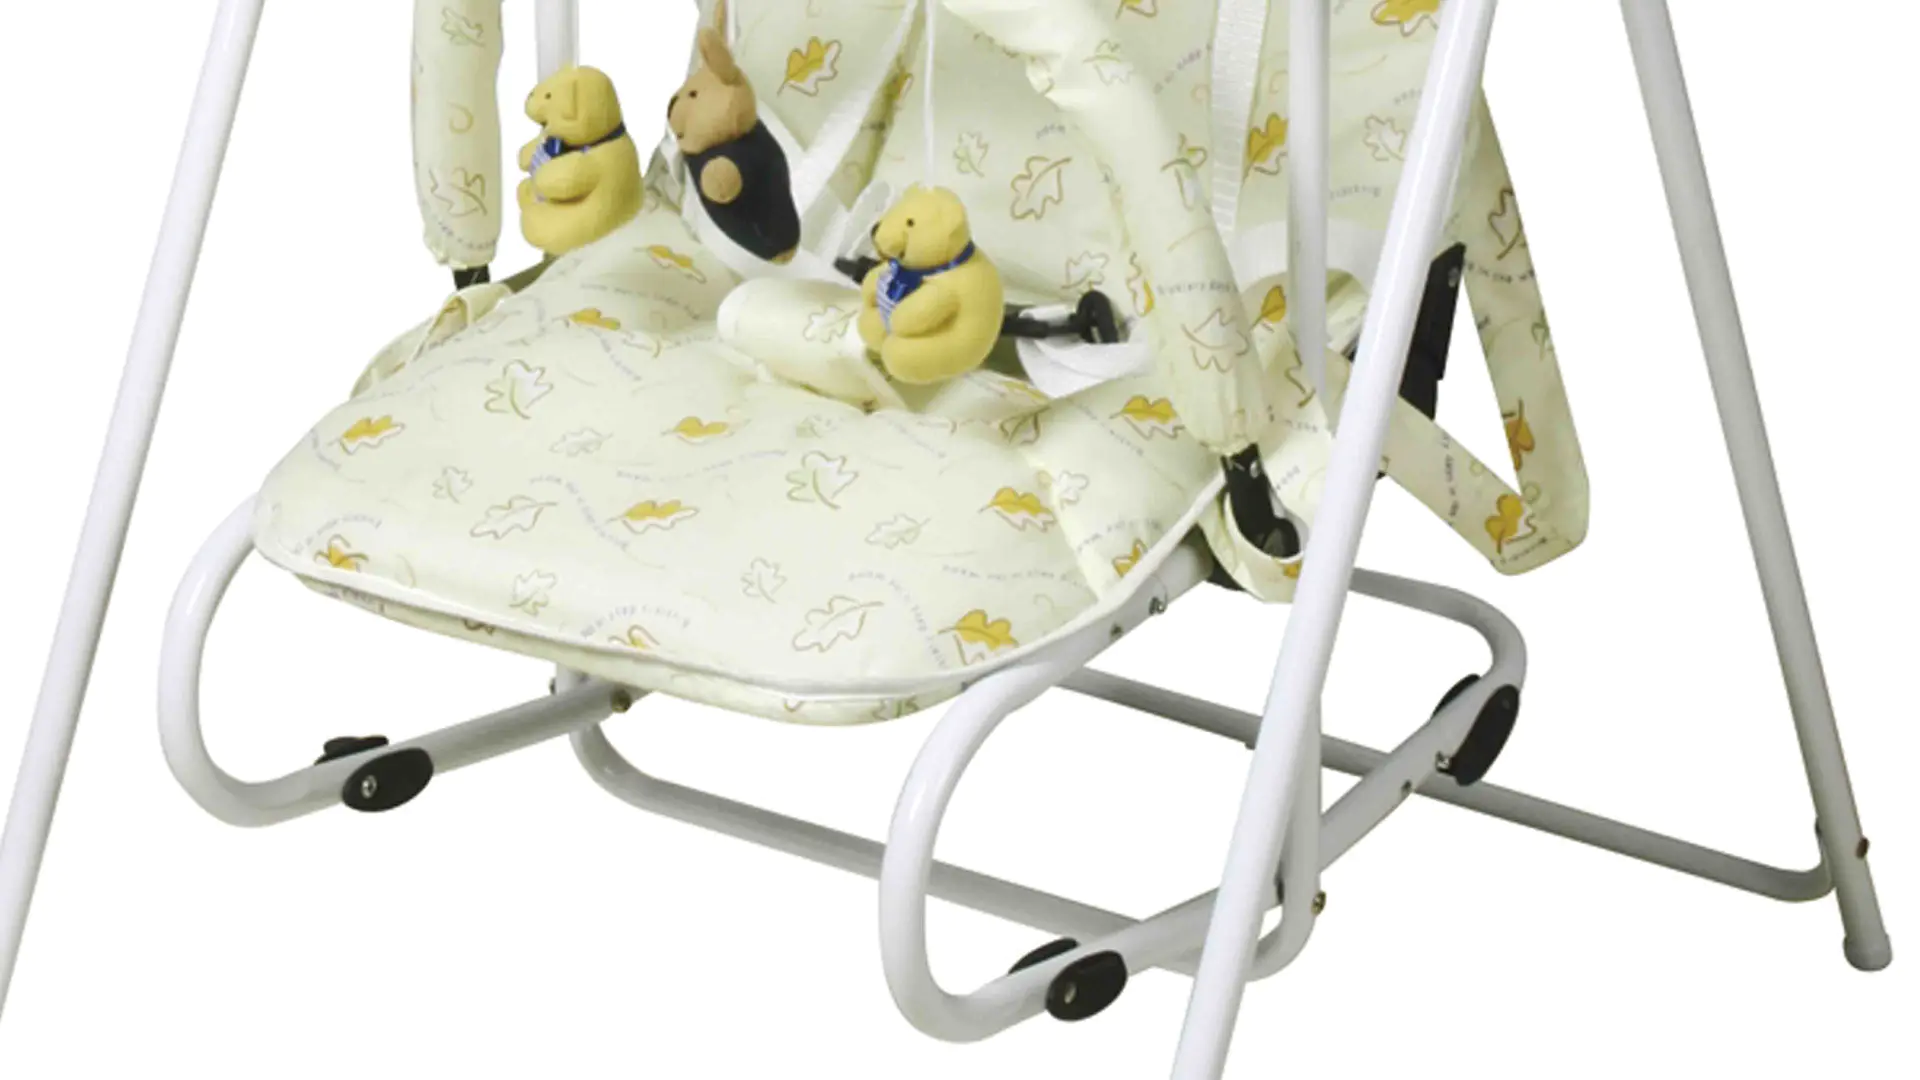 Aoqi buy baby swing design for babys room